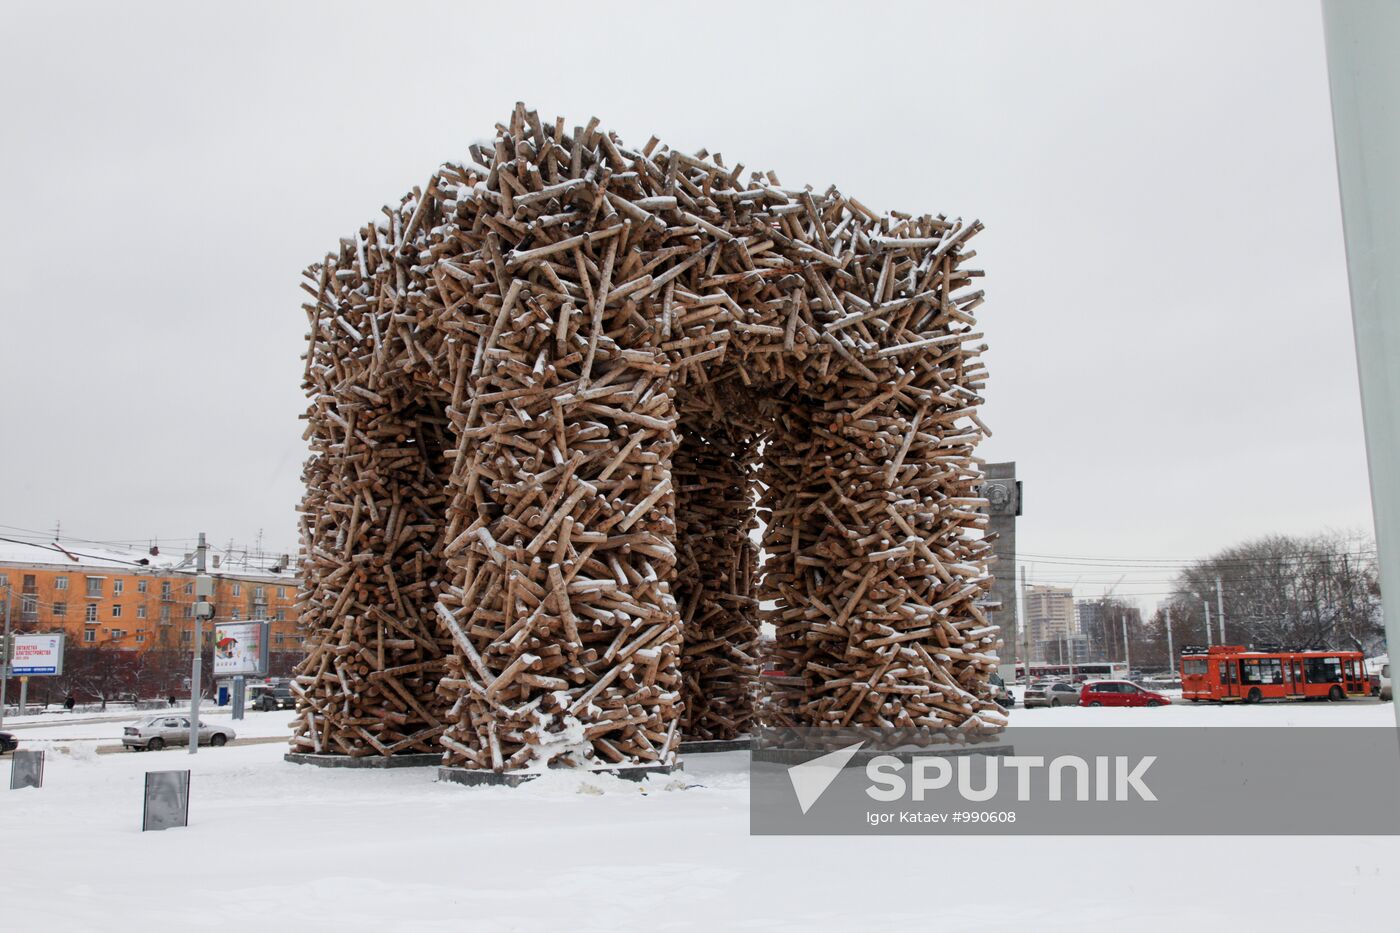 Wooden letter "P" - symbol of cultural capital of Perm